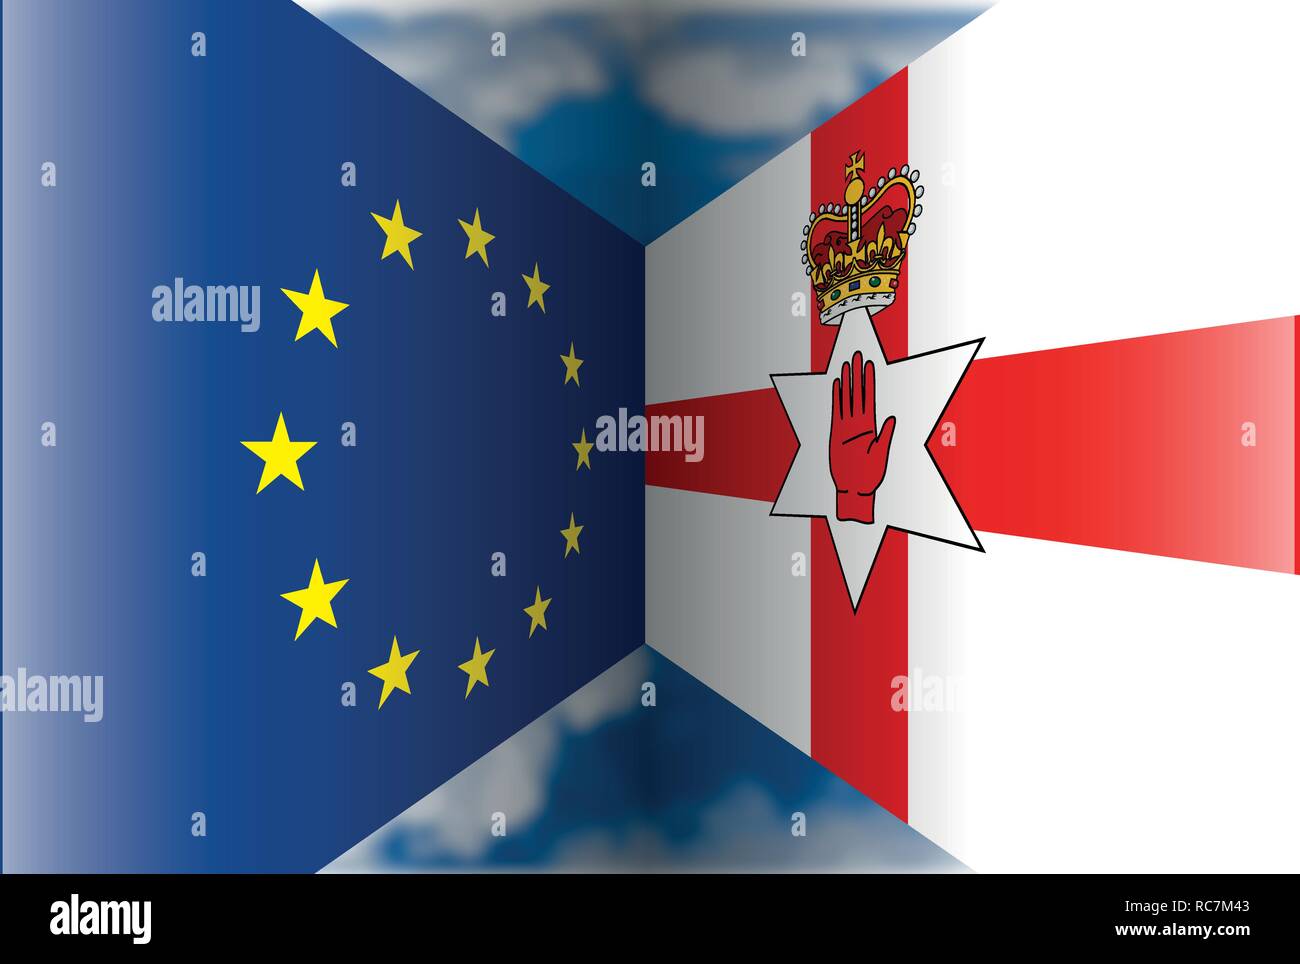 European Union versus North Ireland flags, vector illustration Stock Vector